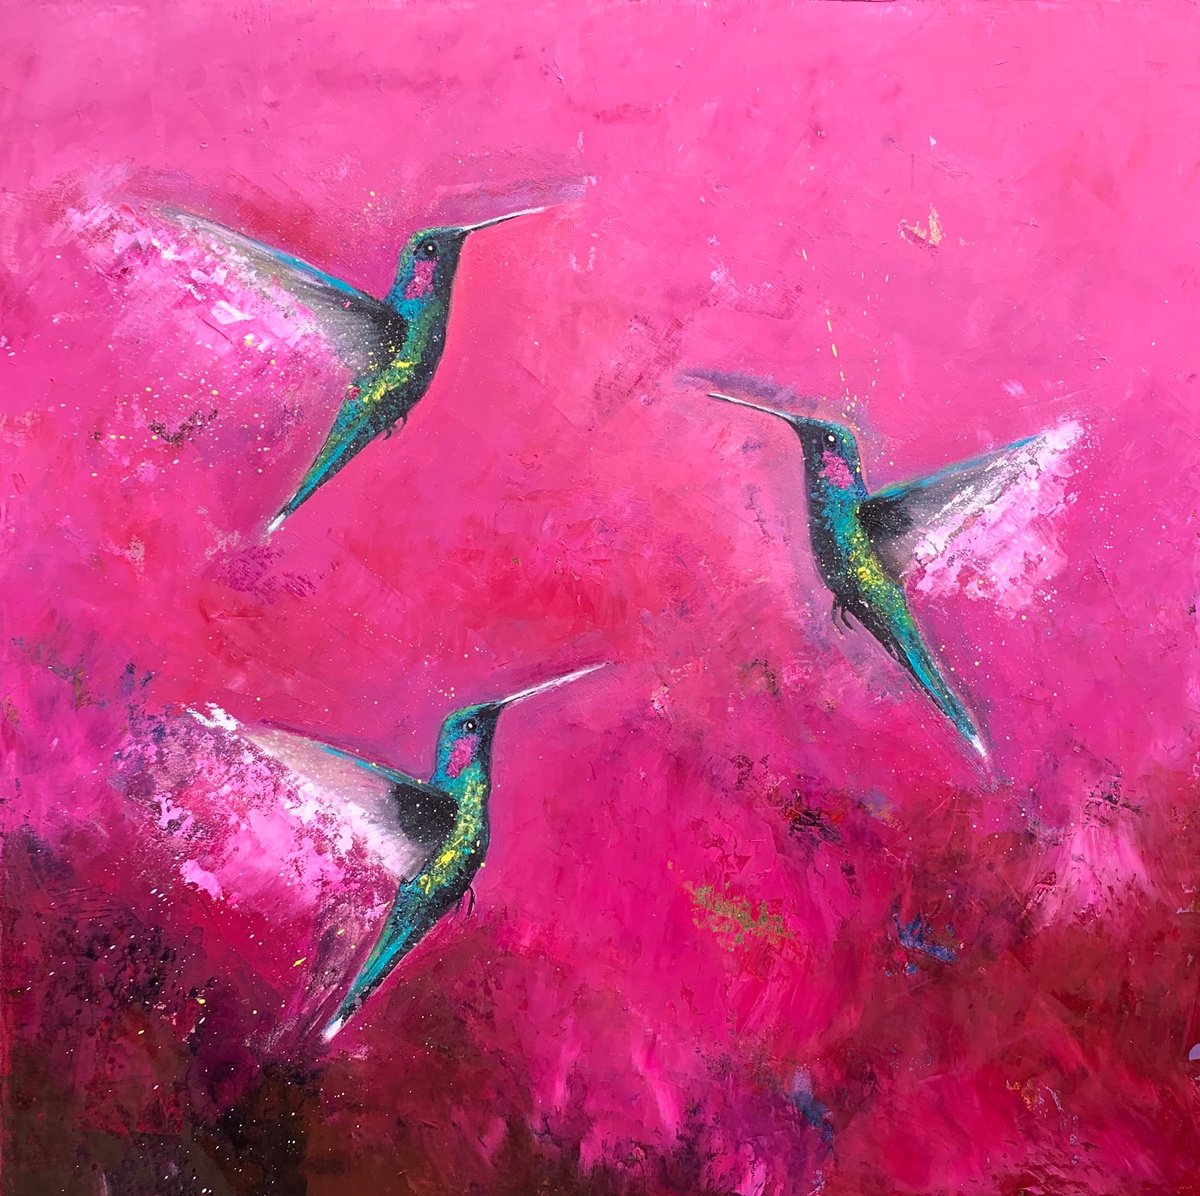 The Joy of Hummingbirds by Laure Bury